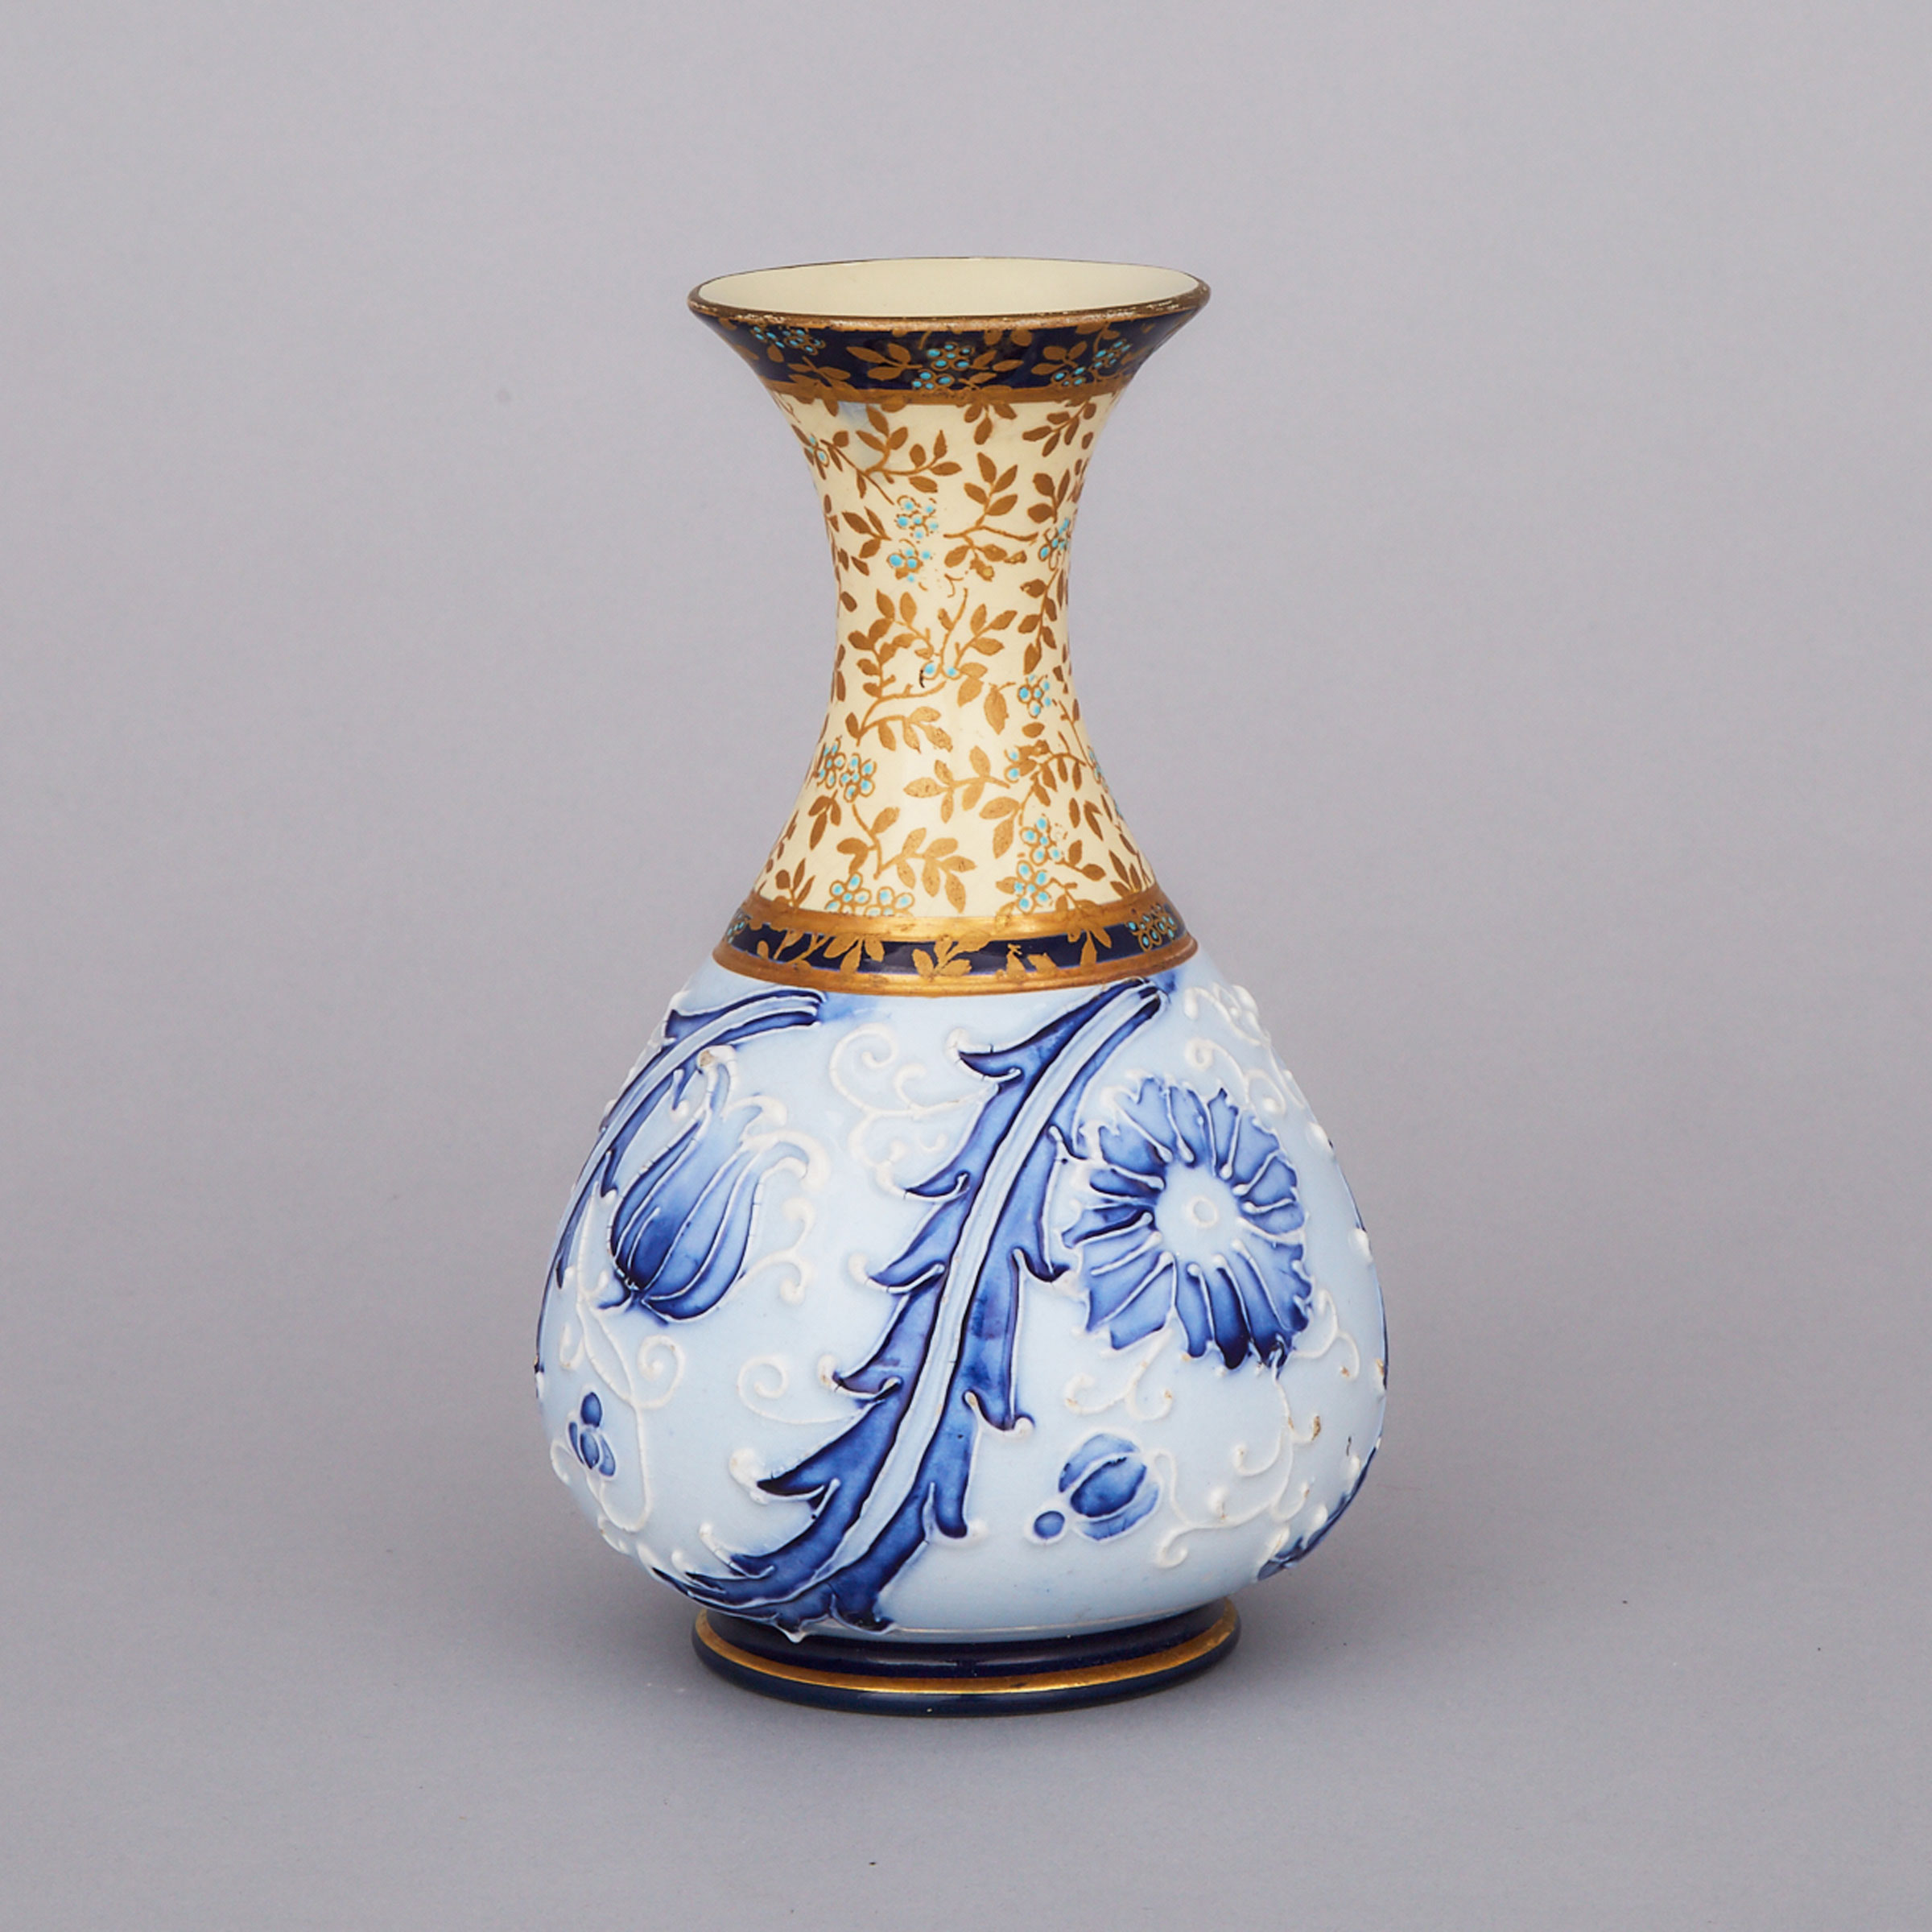 Macintyre Moorcroft Small Vase, c.1900